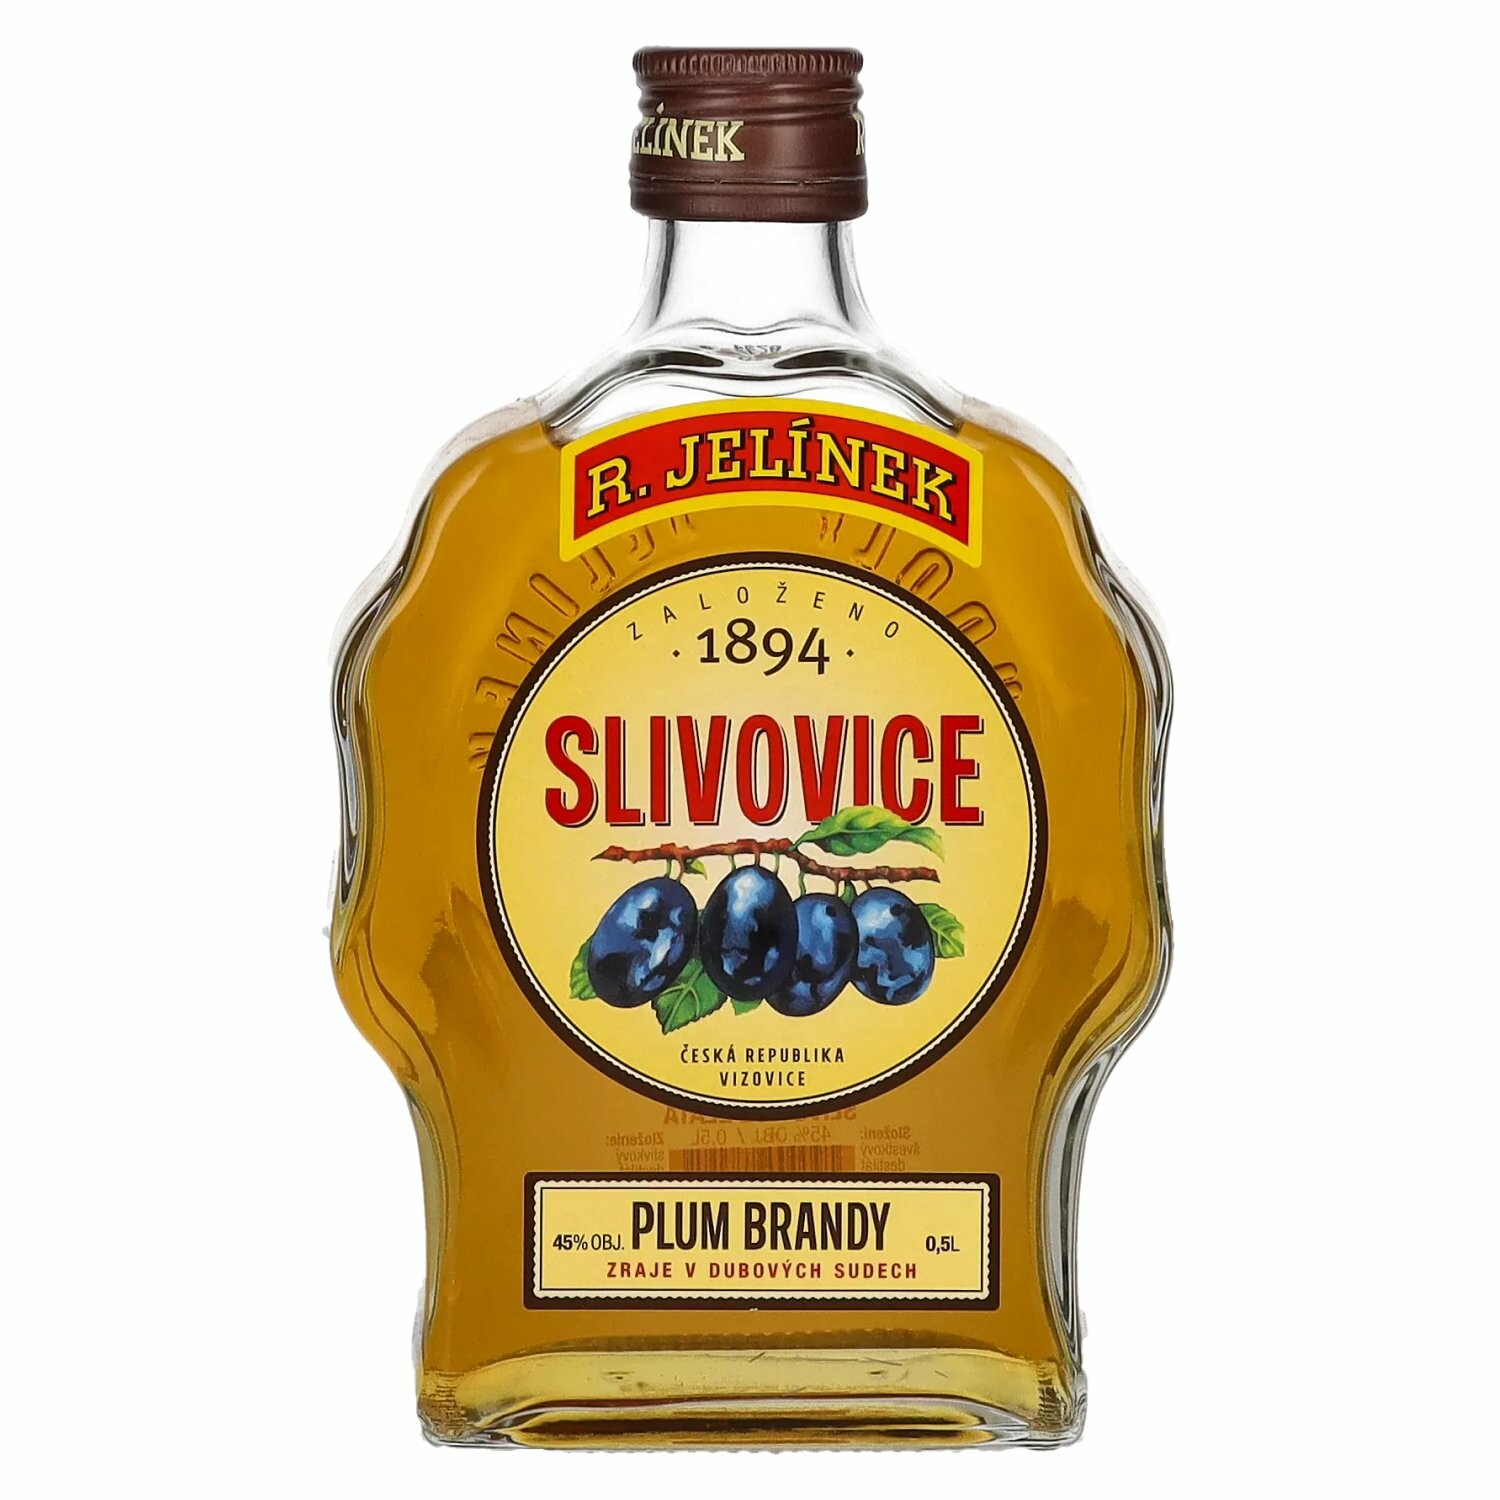 R. Jelínek Slivovice GOLD Plum Brandy 45% Vol. 0,5l